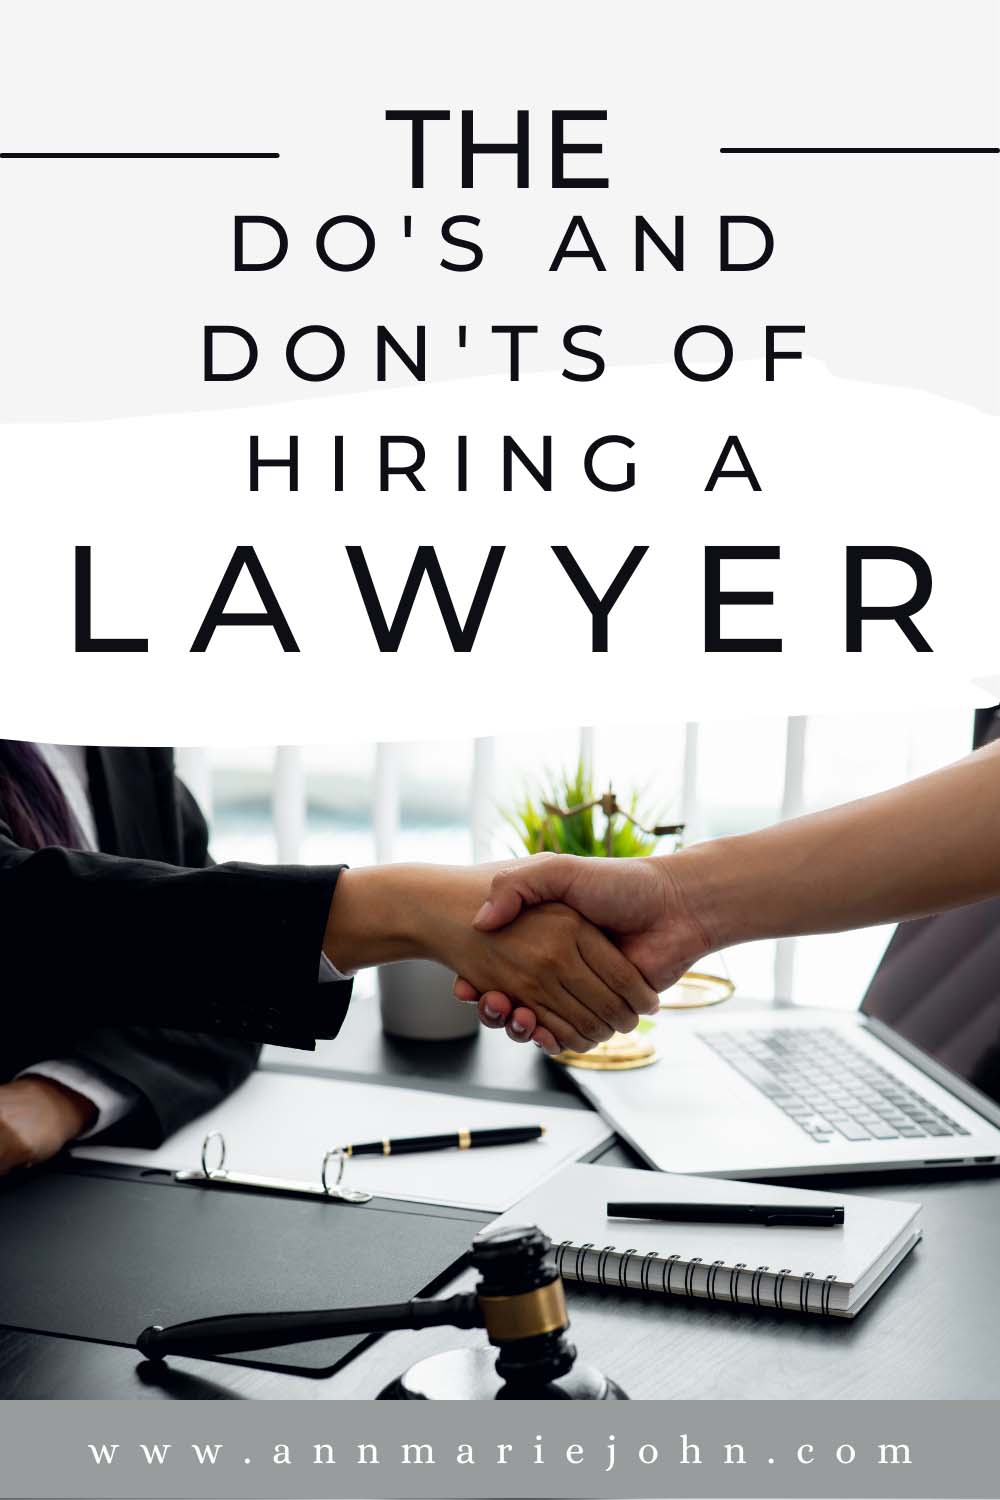 Hiring a Lawyer